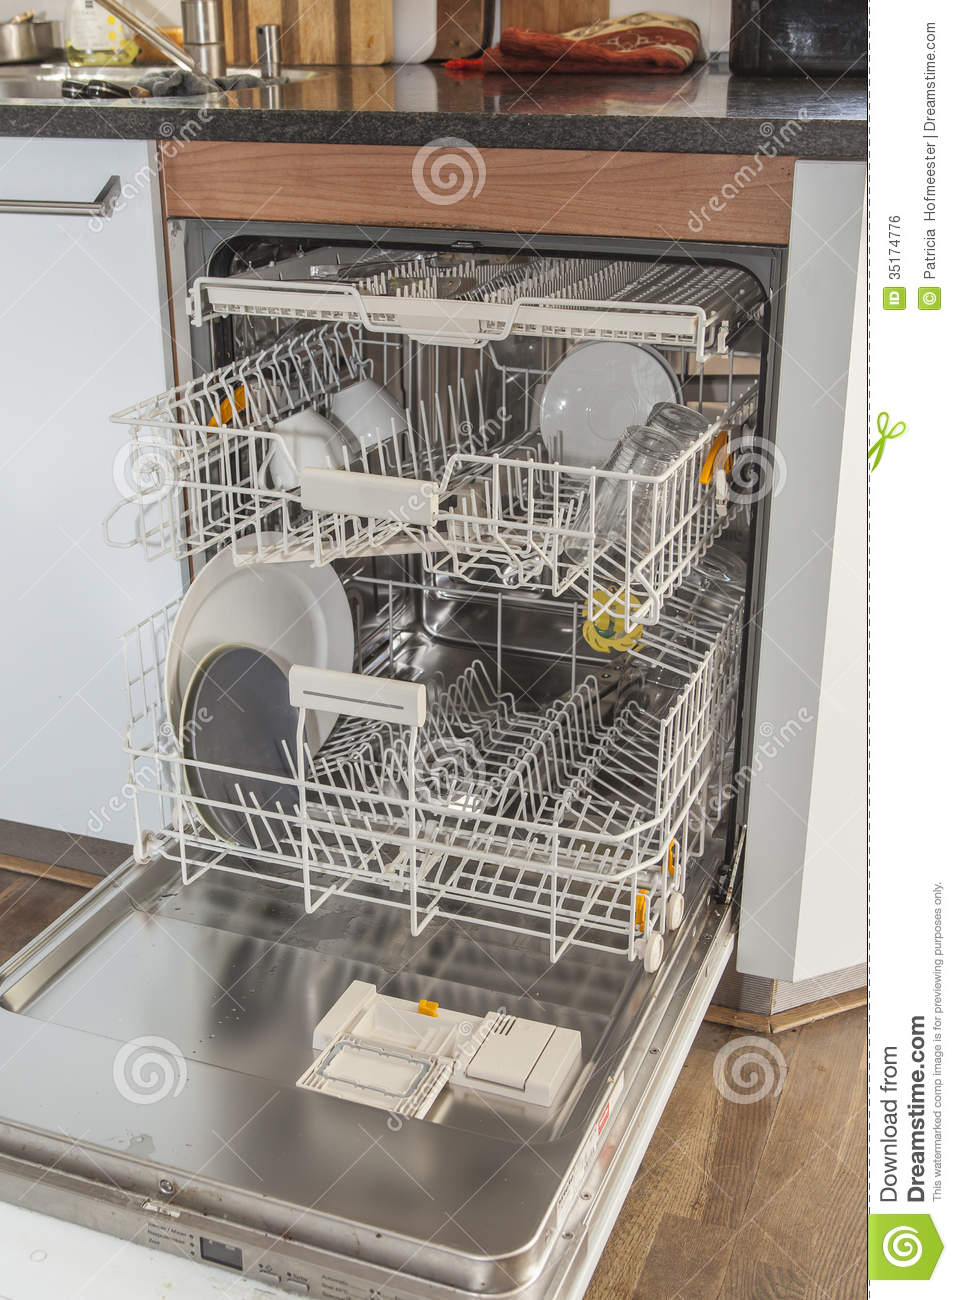 Open Dishwasher In Kitchen Royalty Free Stock Image   Image  35174776